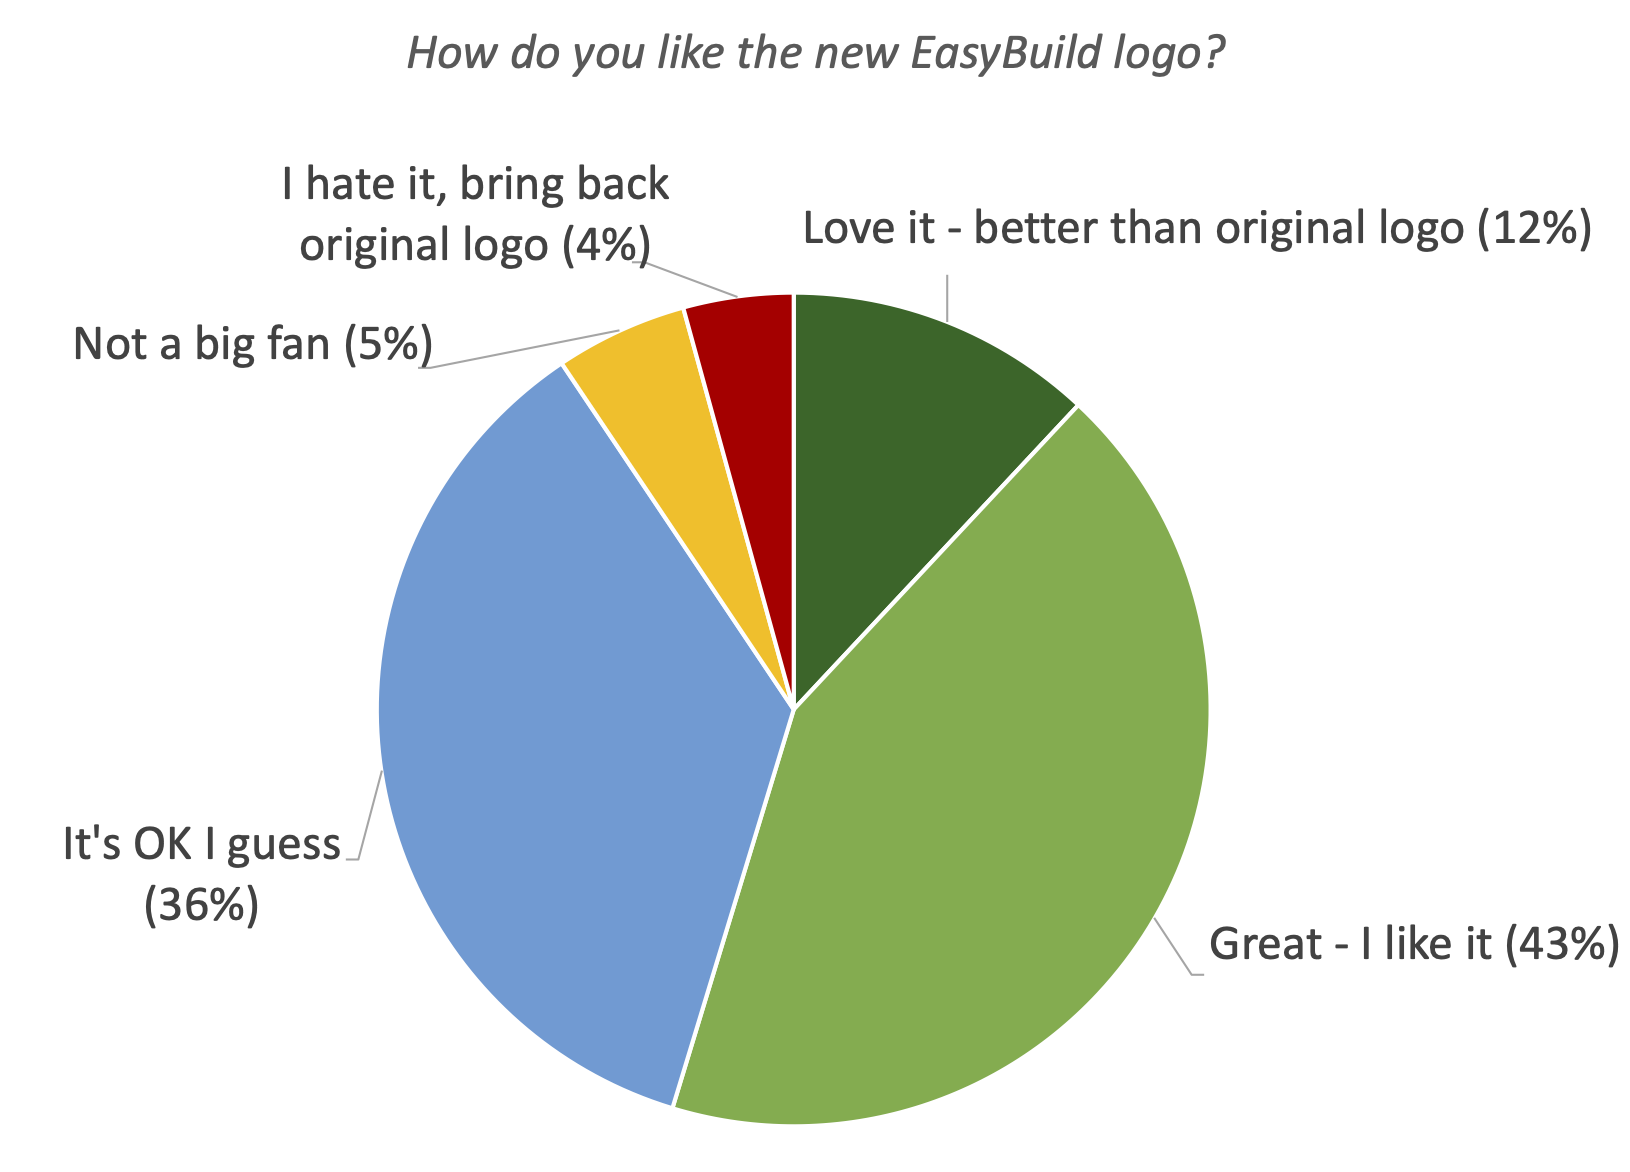 34. How do you like the new EasyBuild logo?